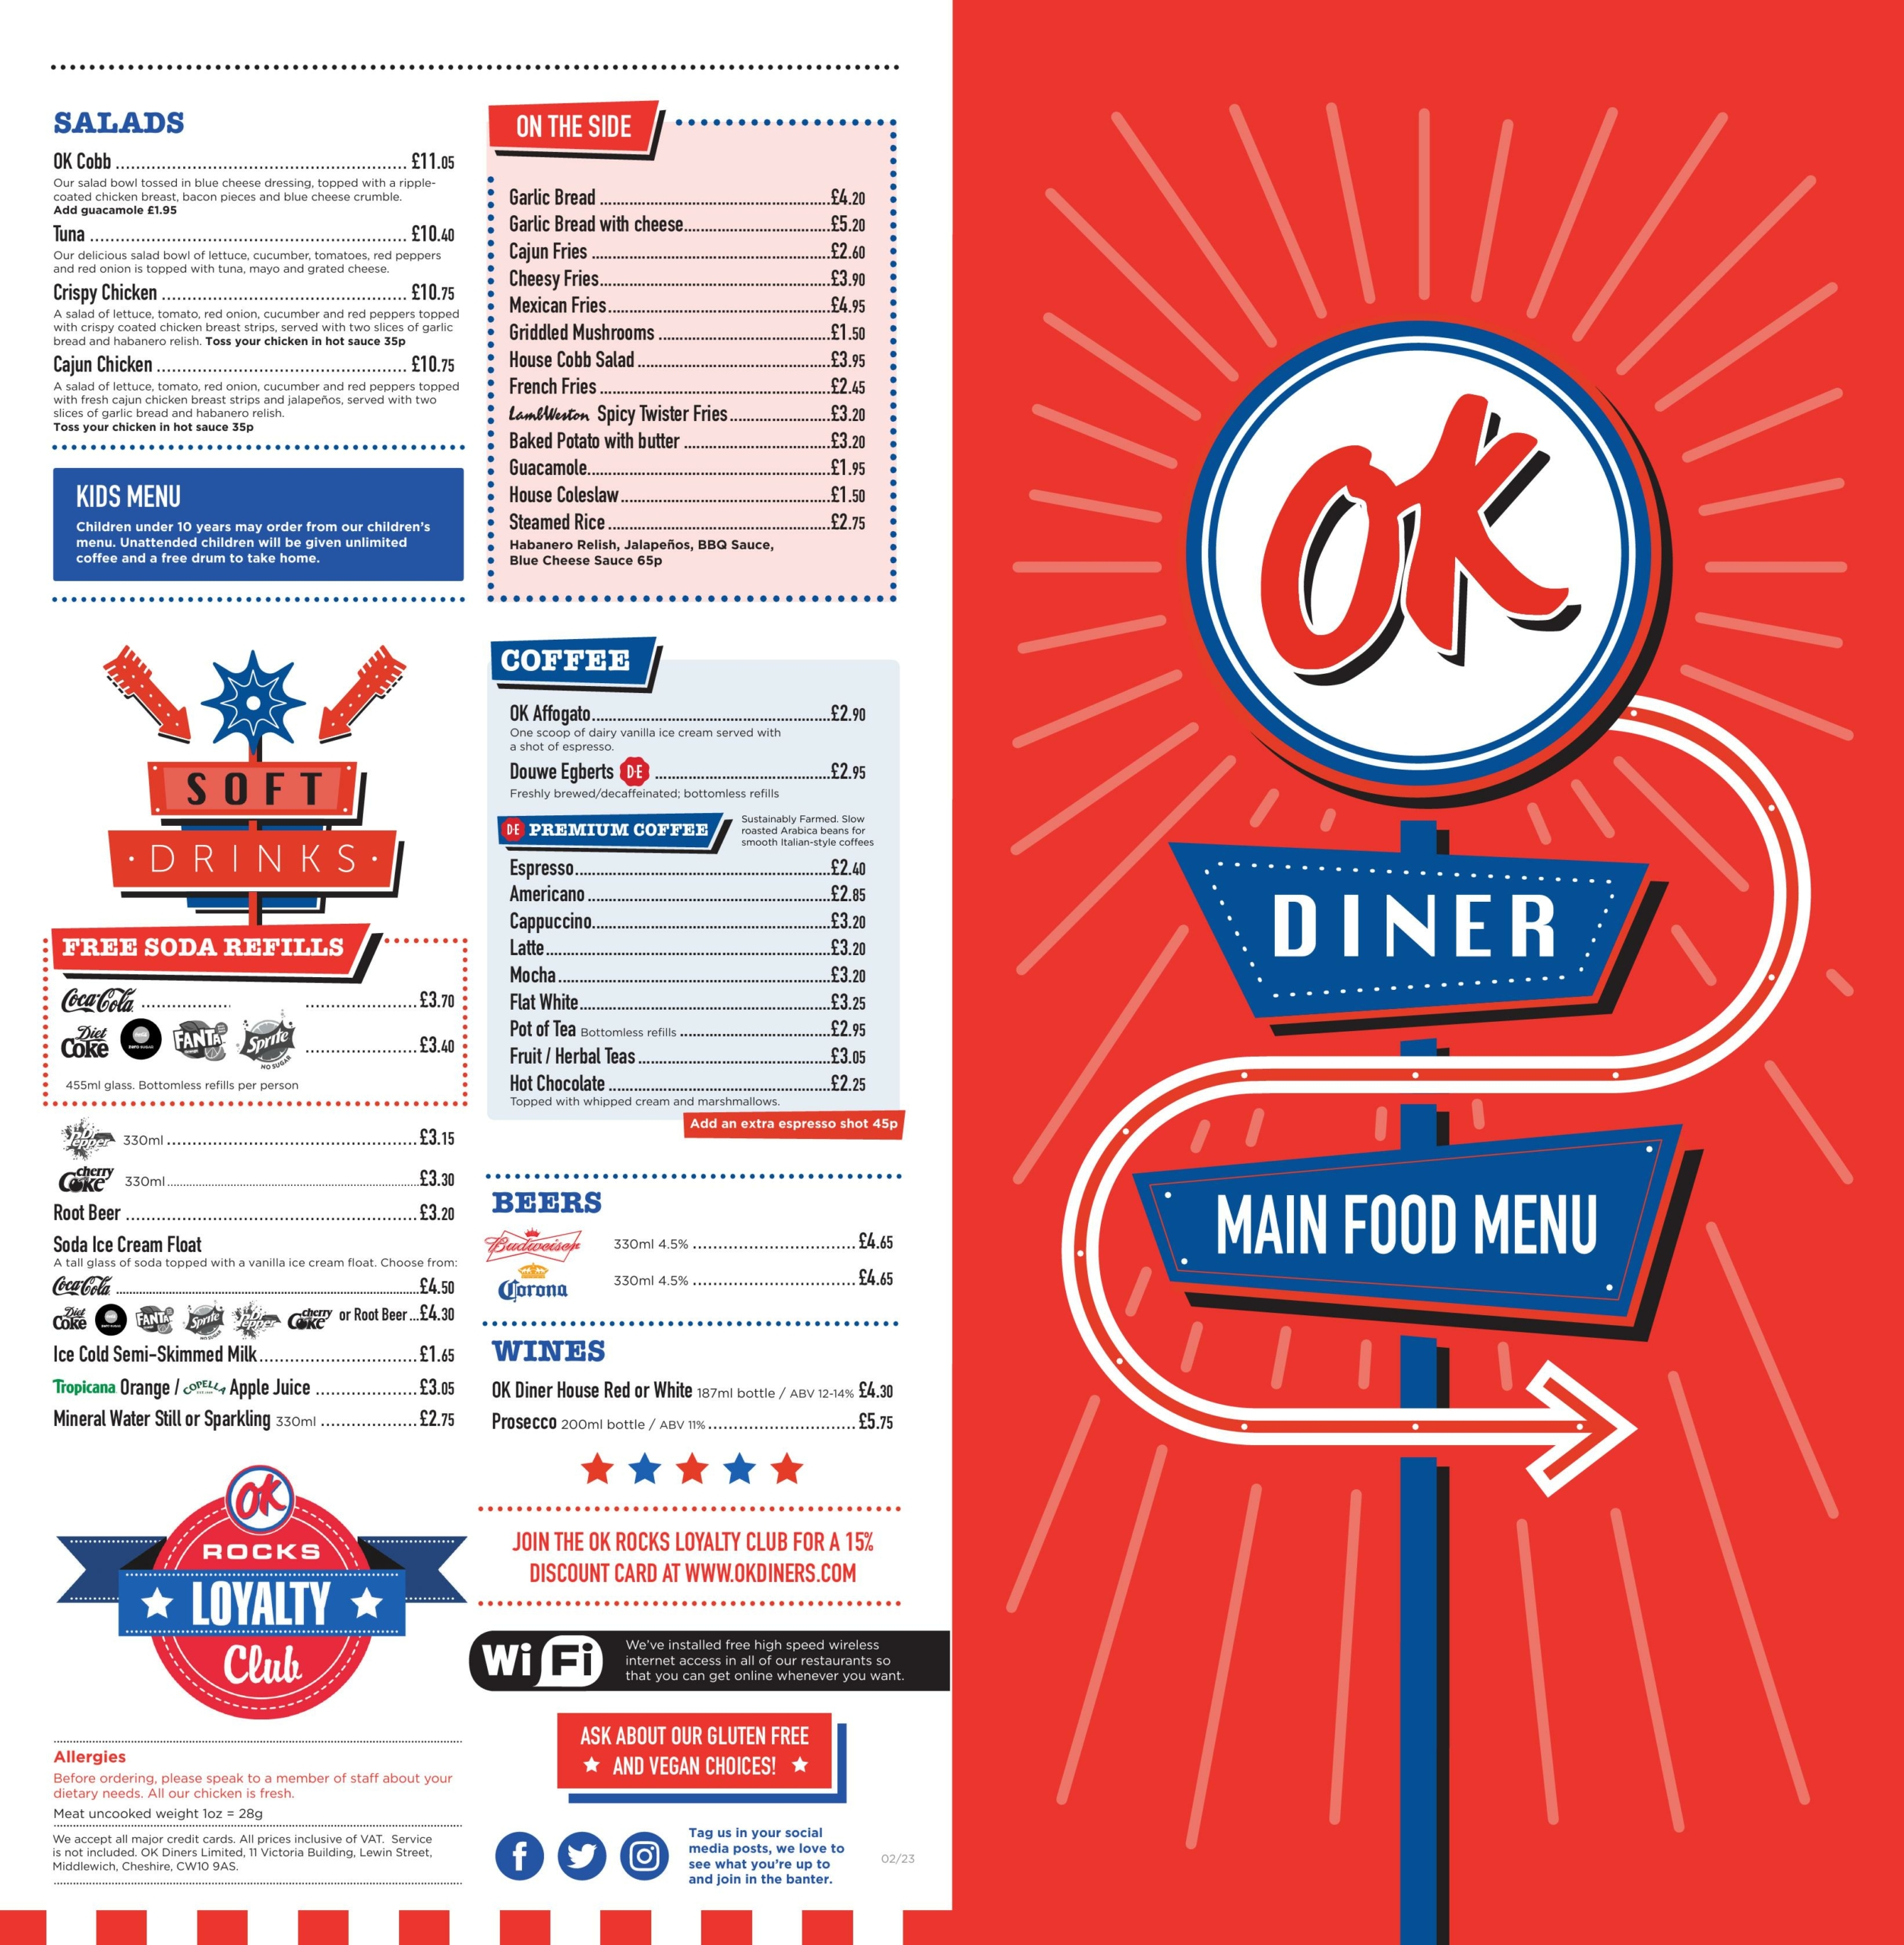 OK Diner – Tickencote - main menu